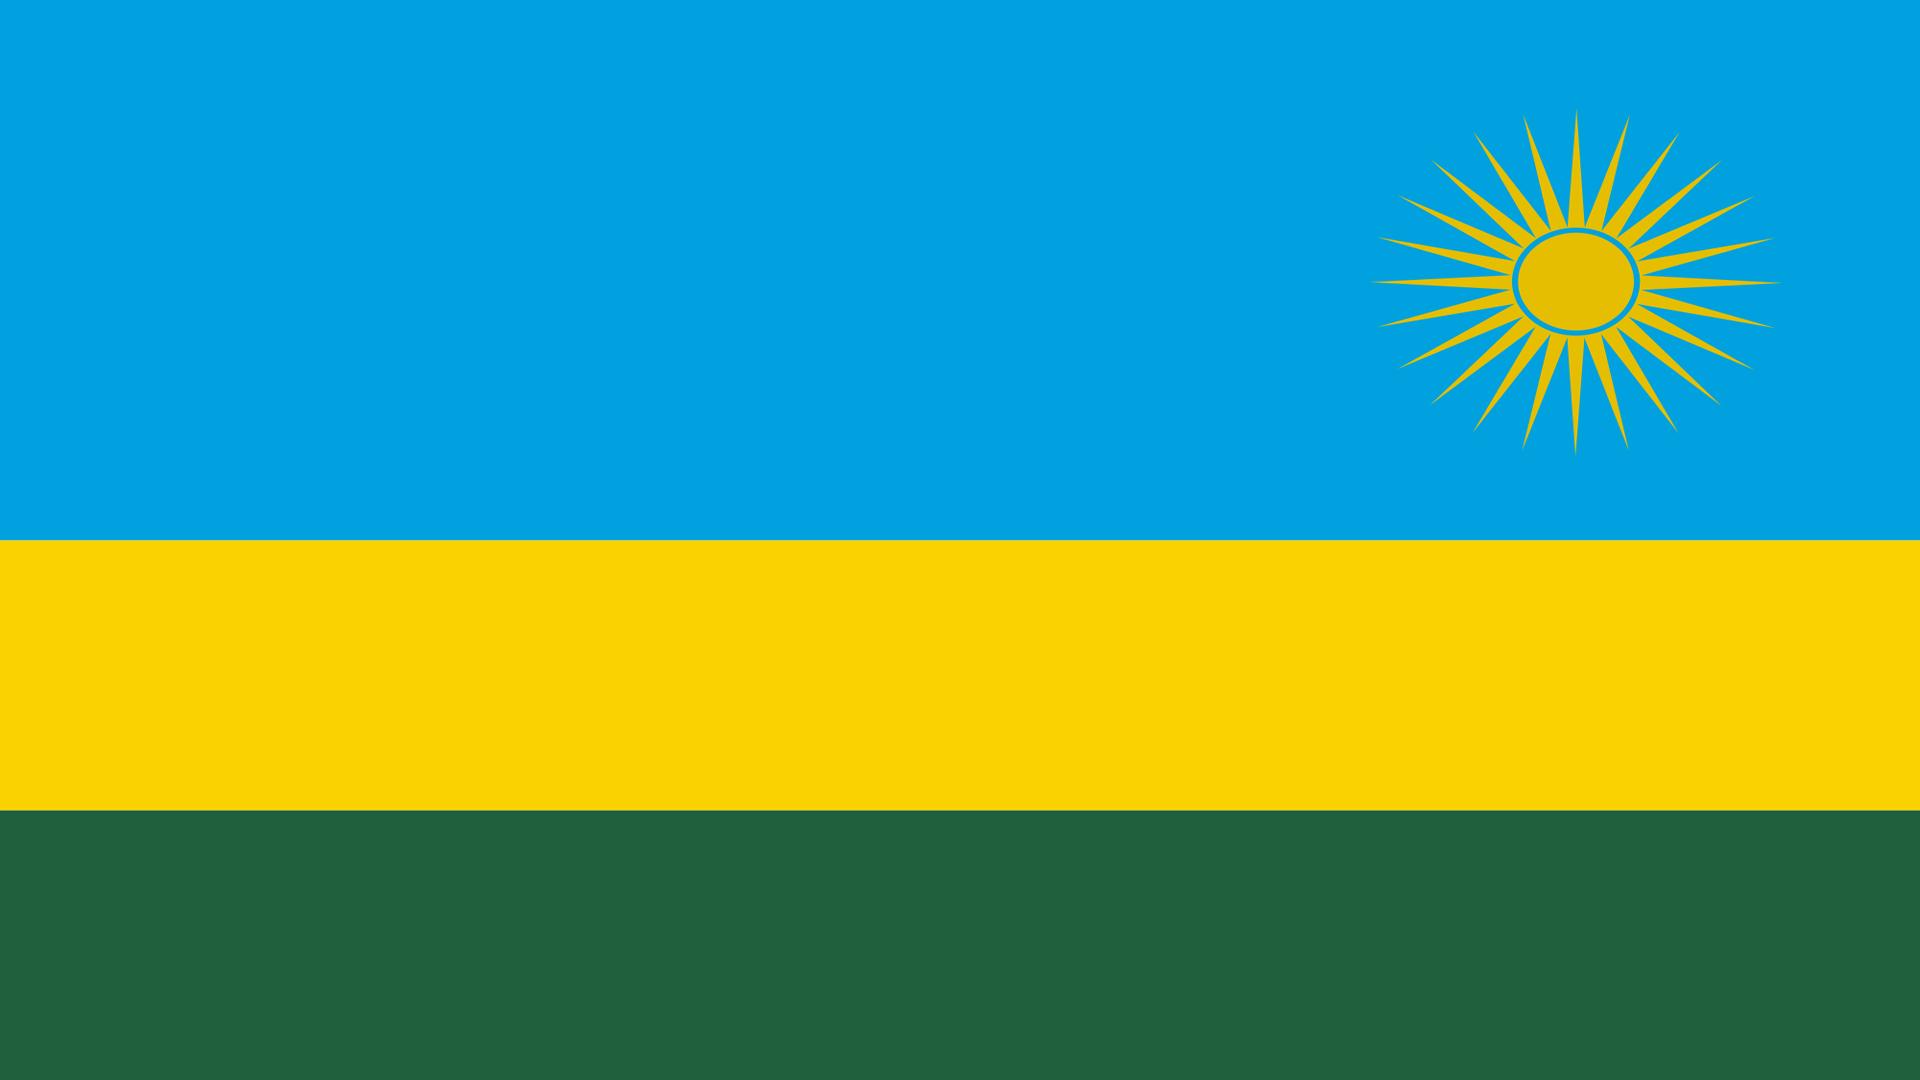 Rwanda Flag, High Definition, High Quality, Widescreen